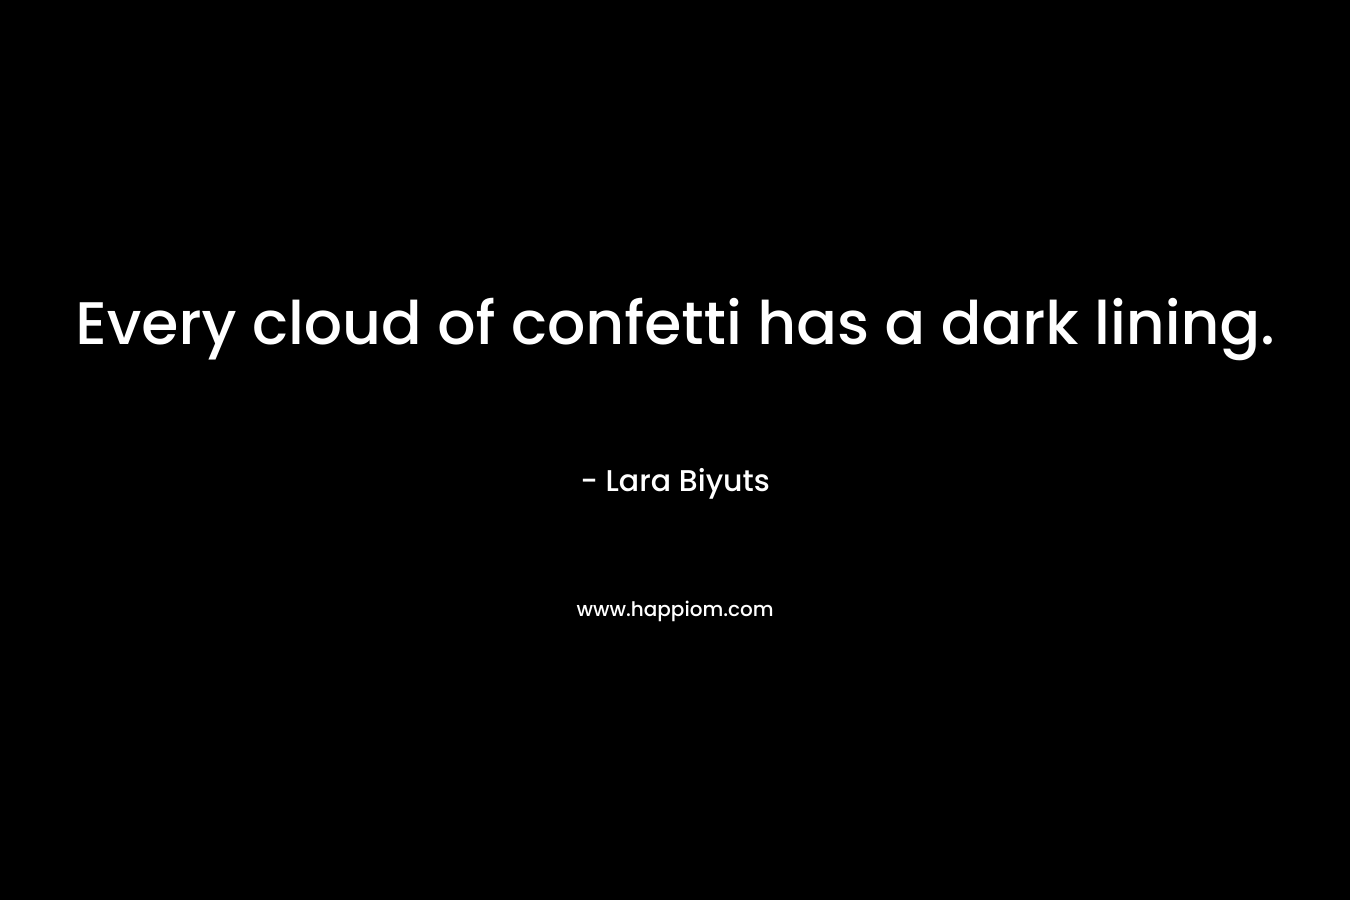 Every cloud of confetti has a dark lining. – Lara Biyuts